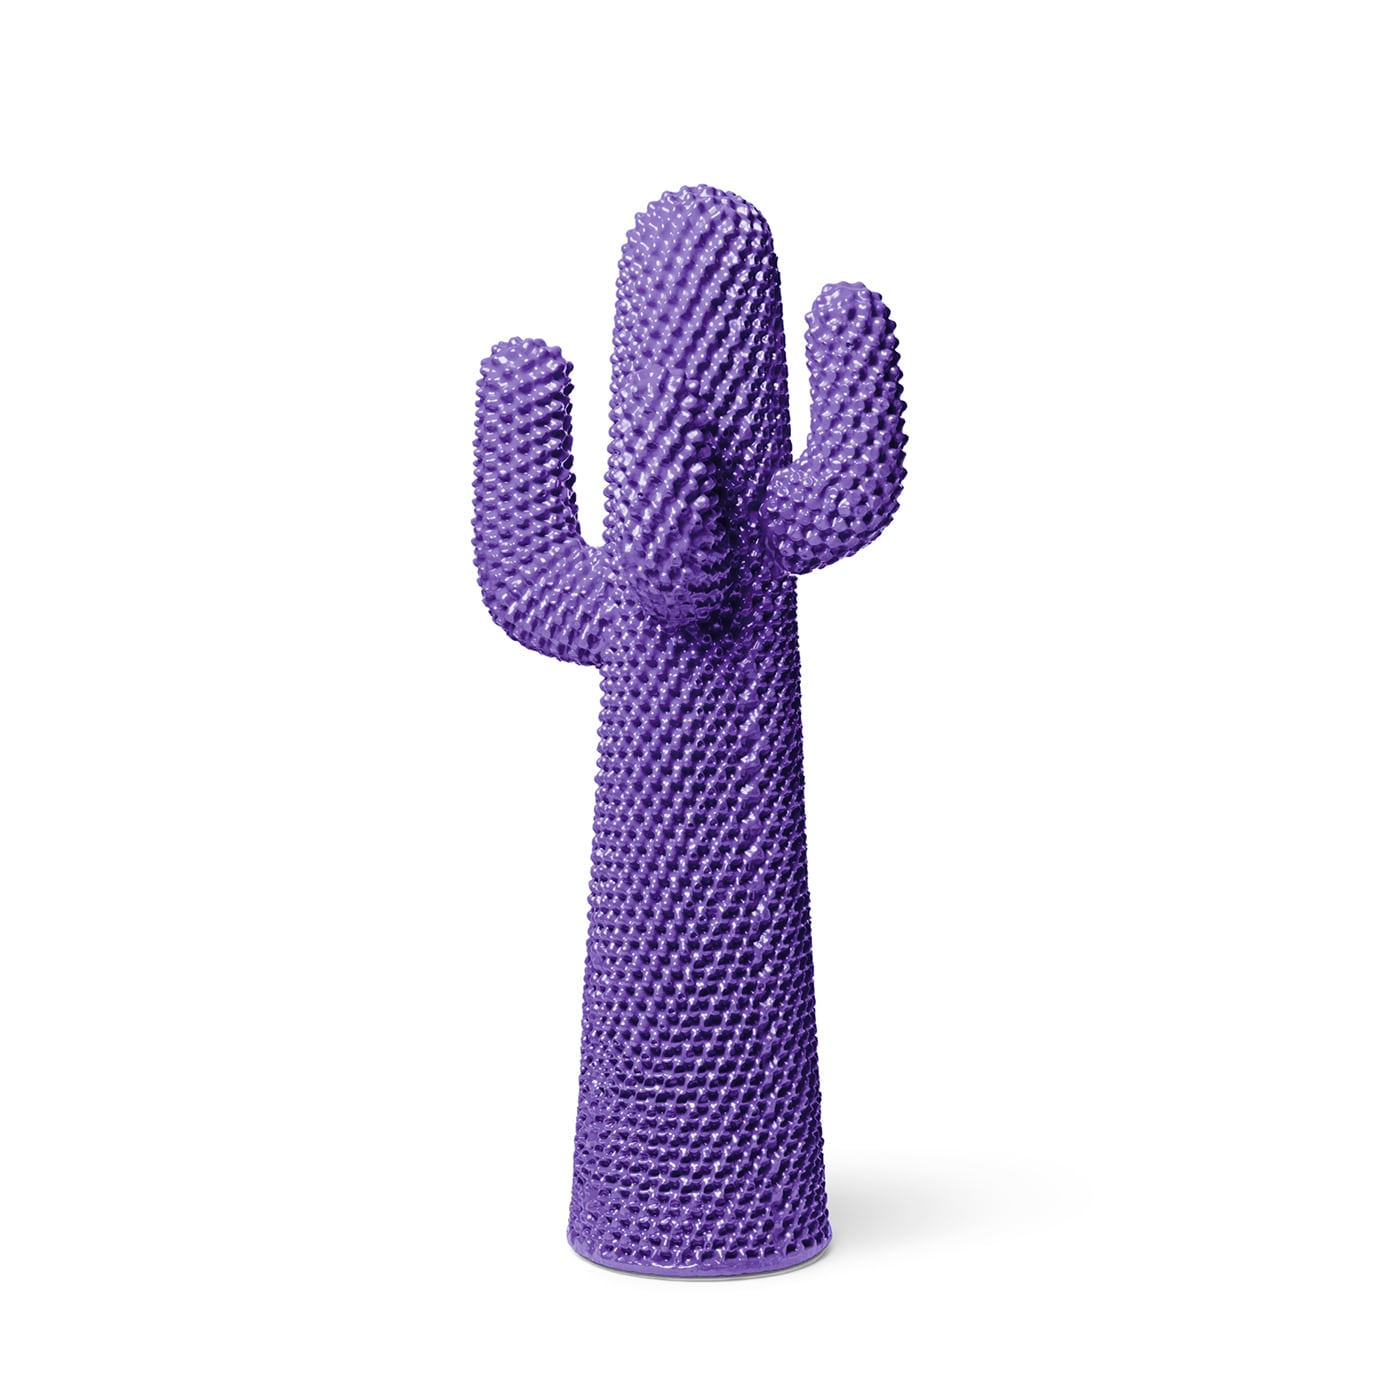 Gufram Cactus Ultraviolet Limited Appendiabiti